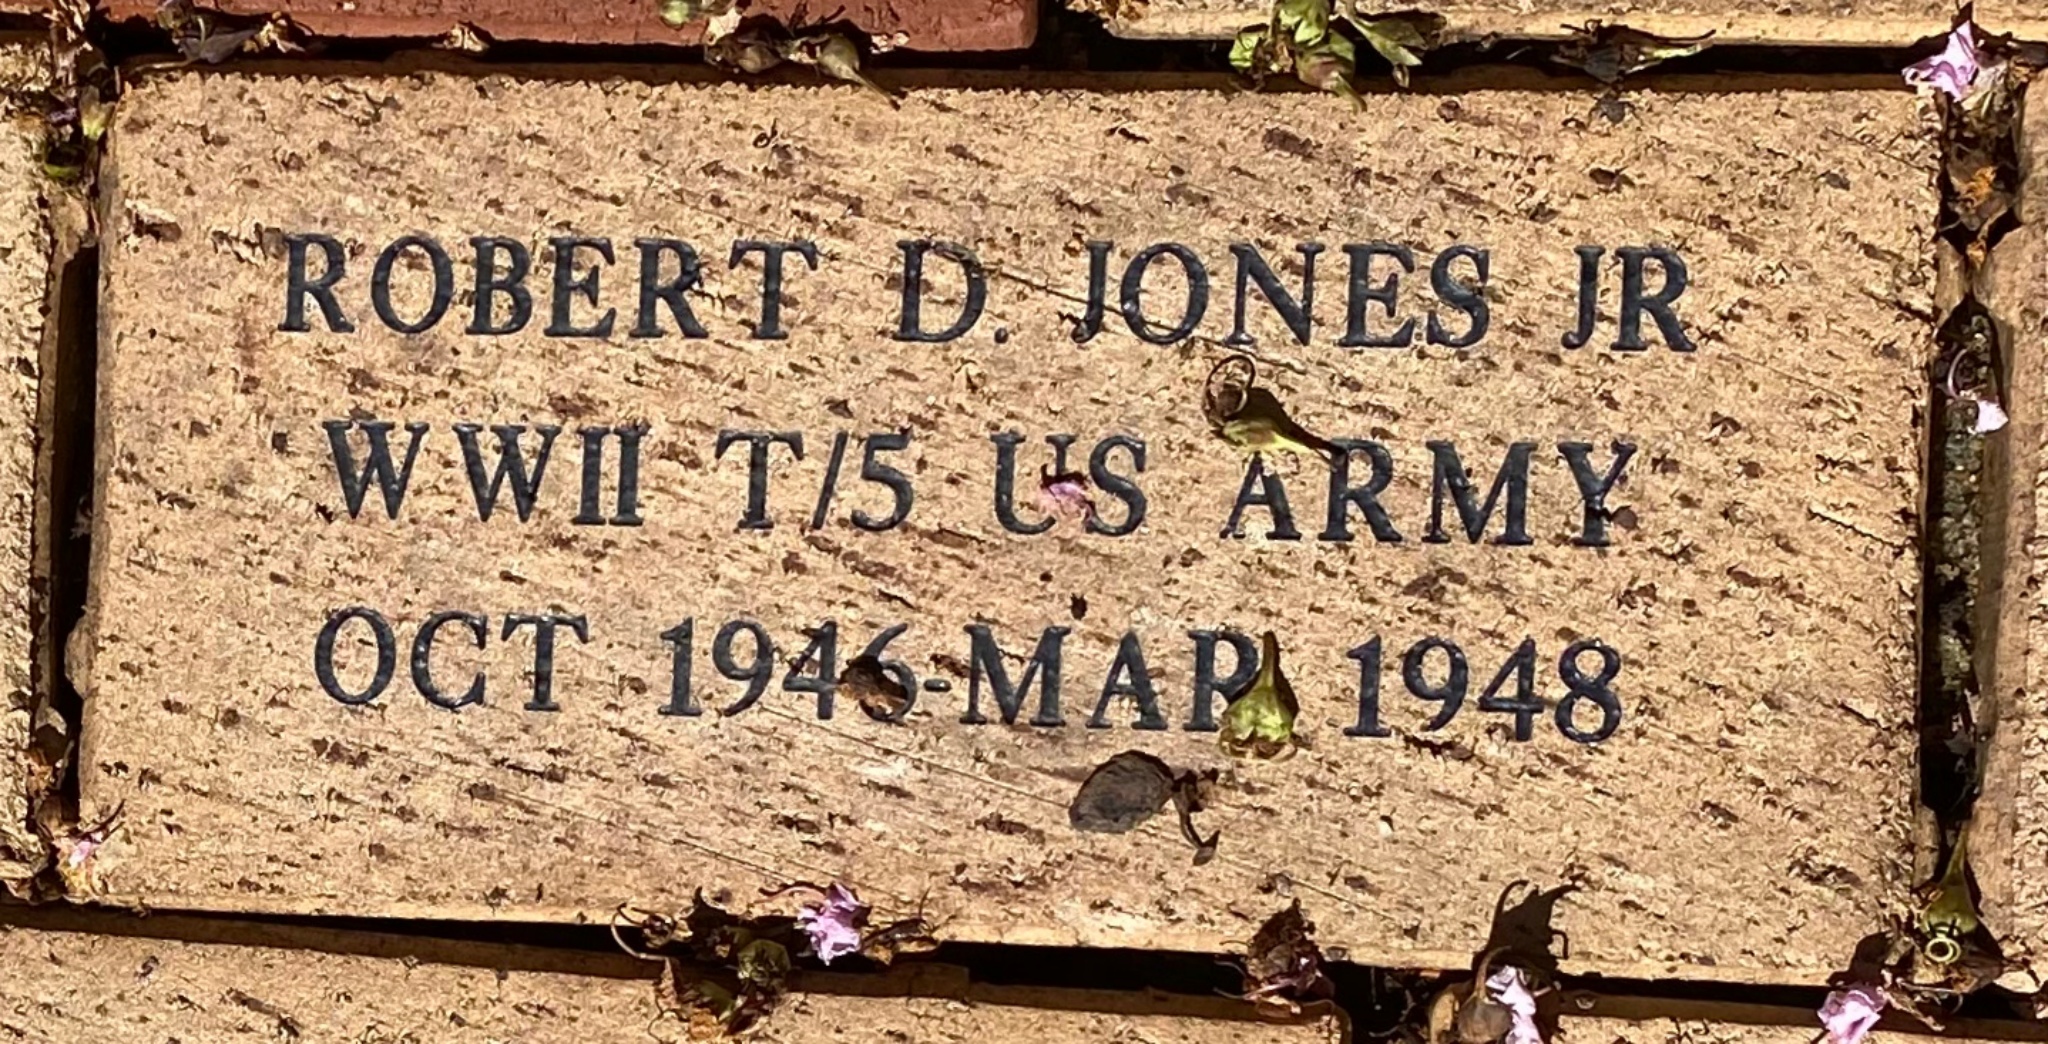 ROBERT D JONES JR WWII T/5 US ARMY OCT 1946-MAR 1948